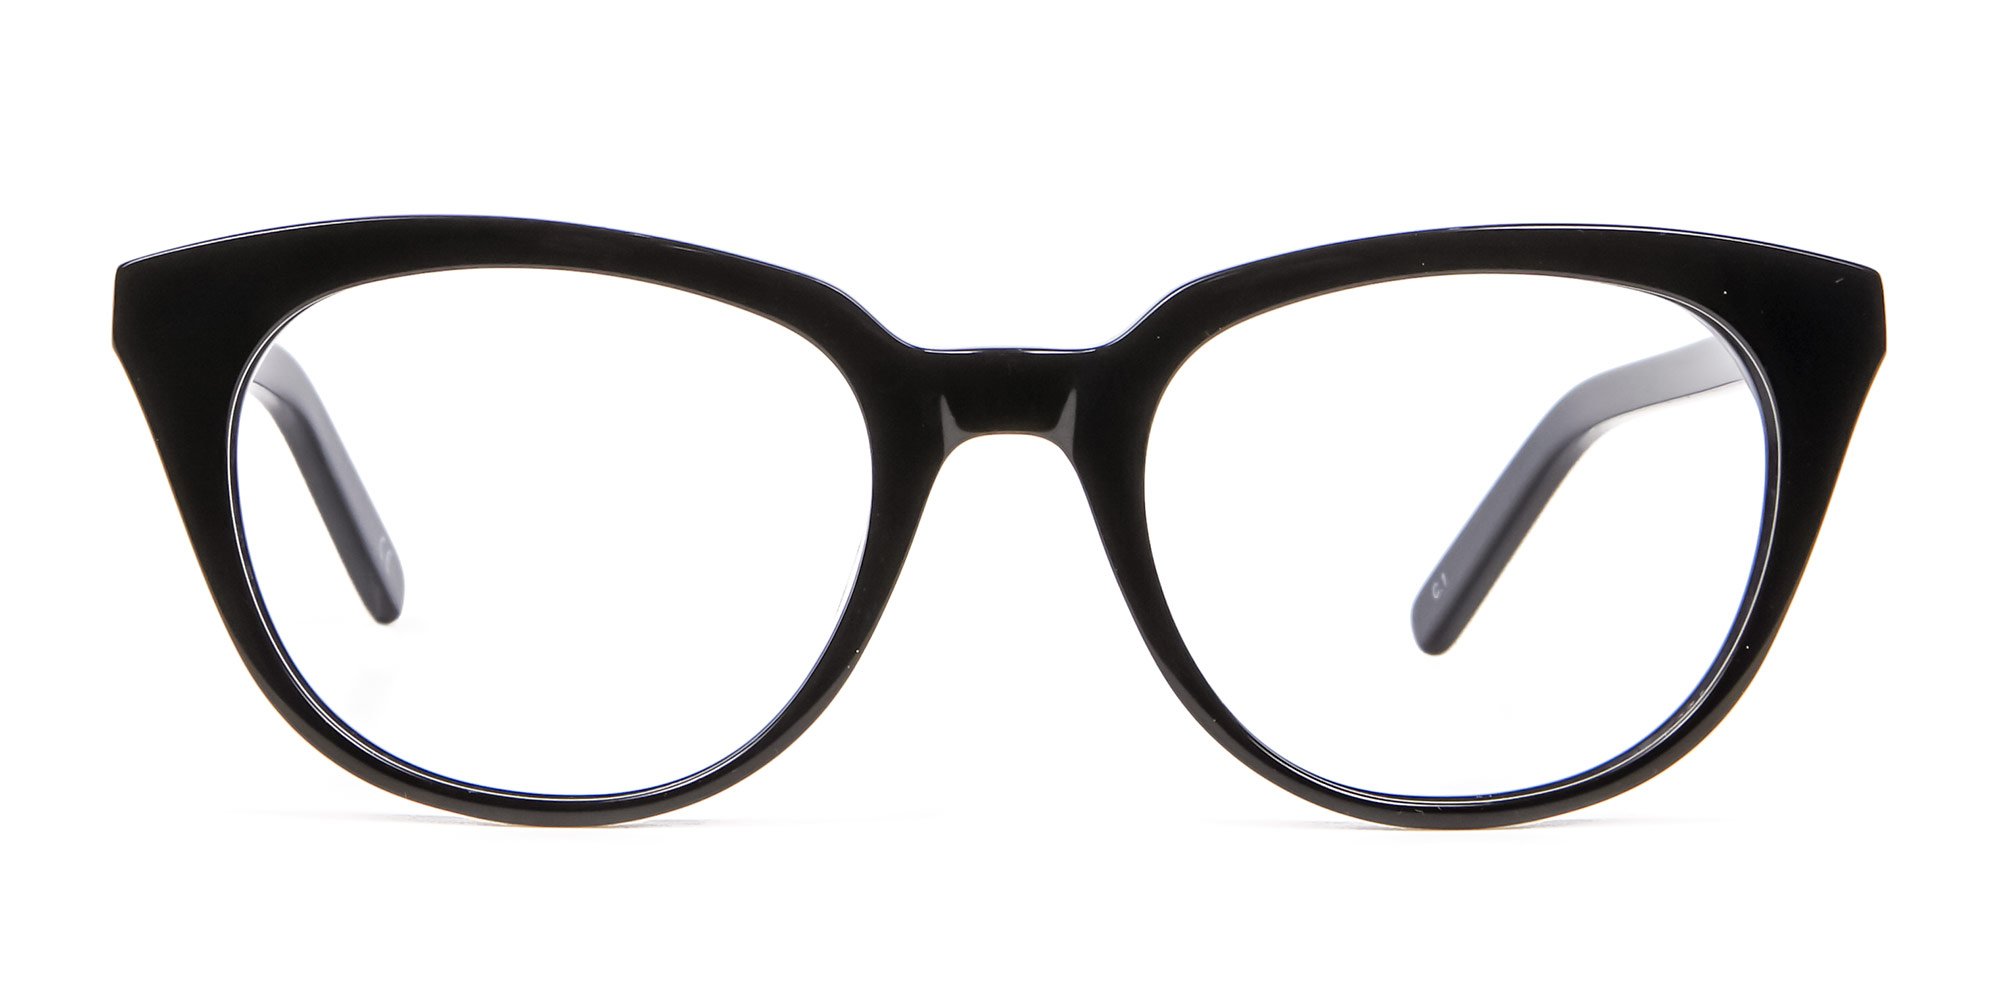 Vintage black cat eye glasses